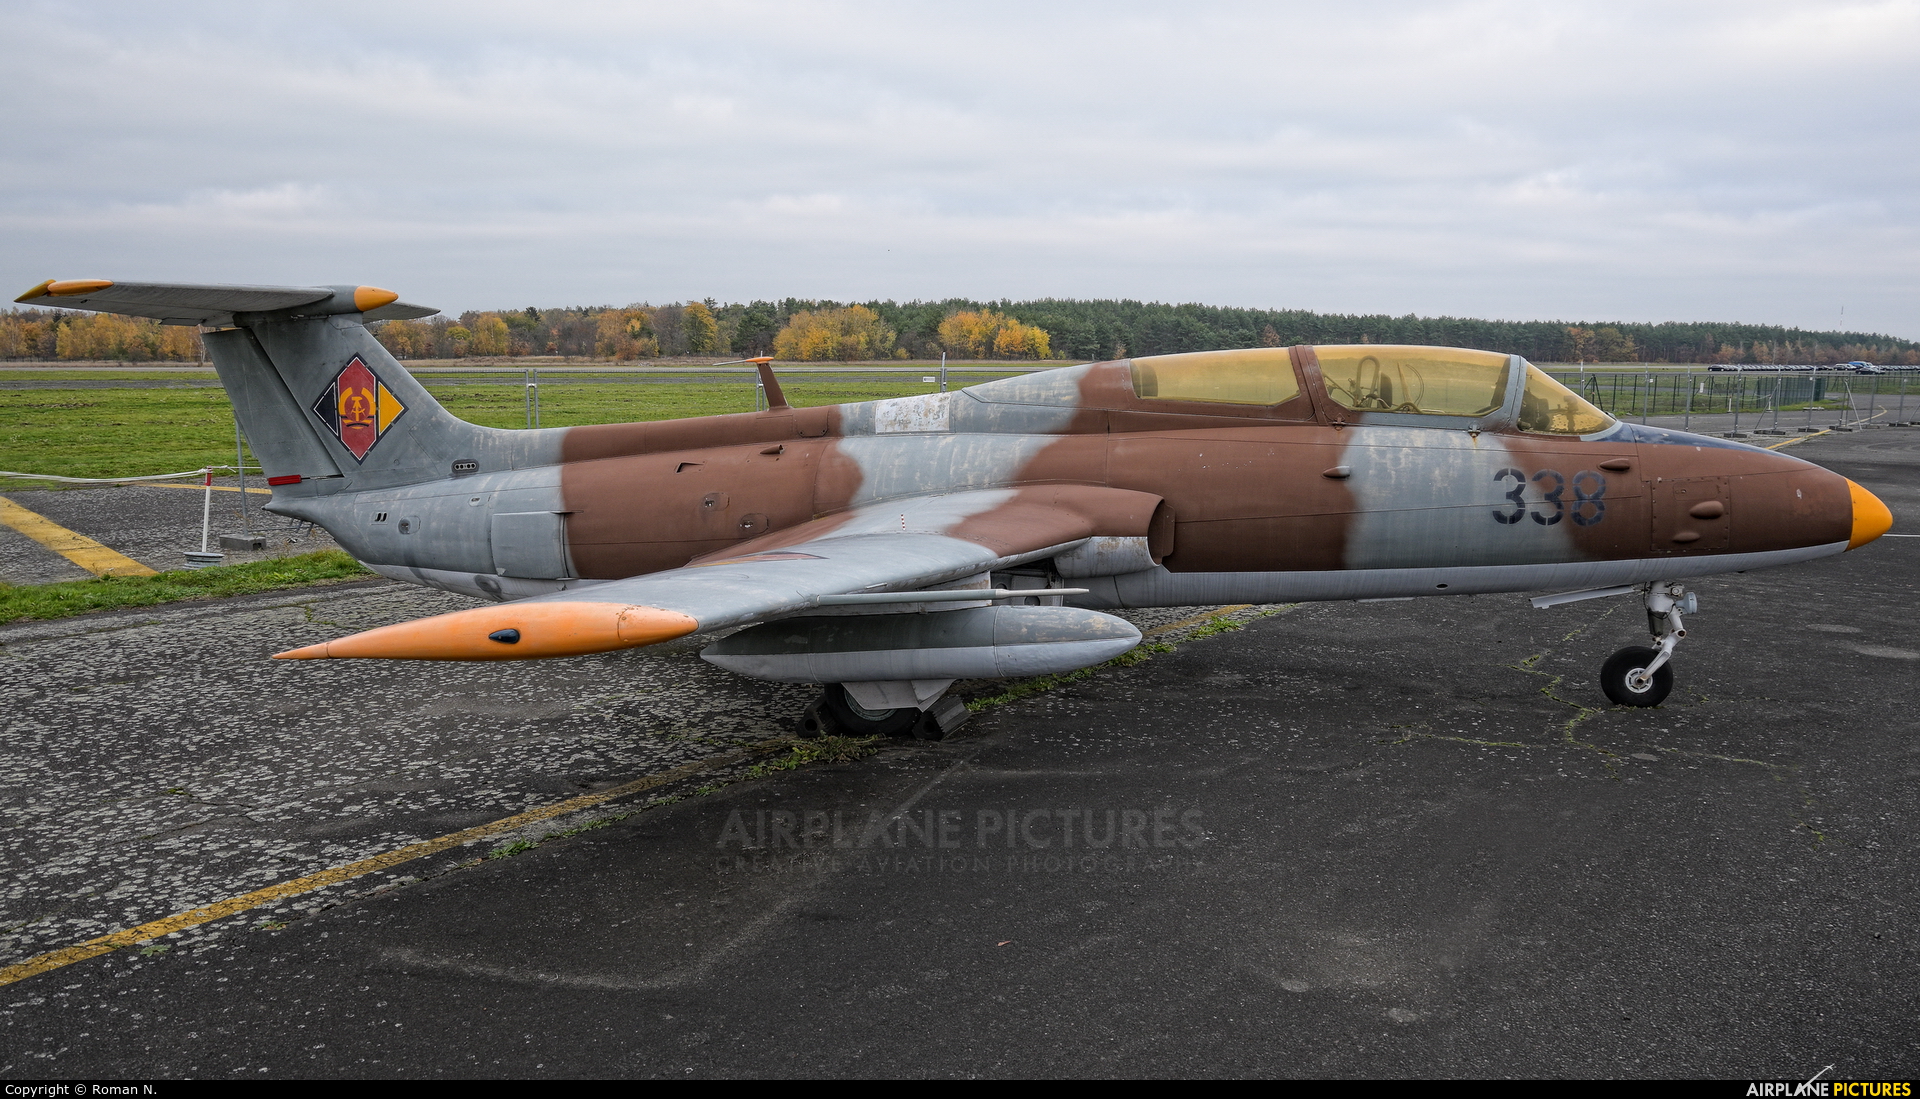 Germany - Democratic Republic Air Force 338 aircraft at Berlin - Gatow